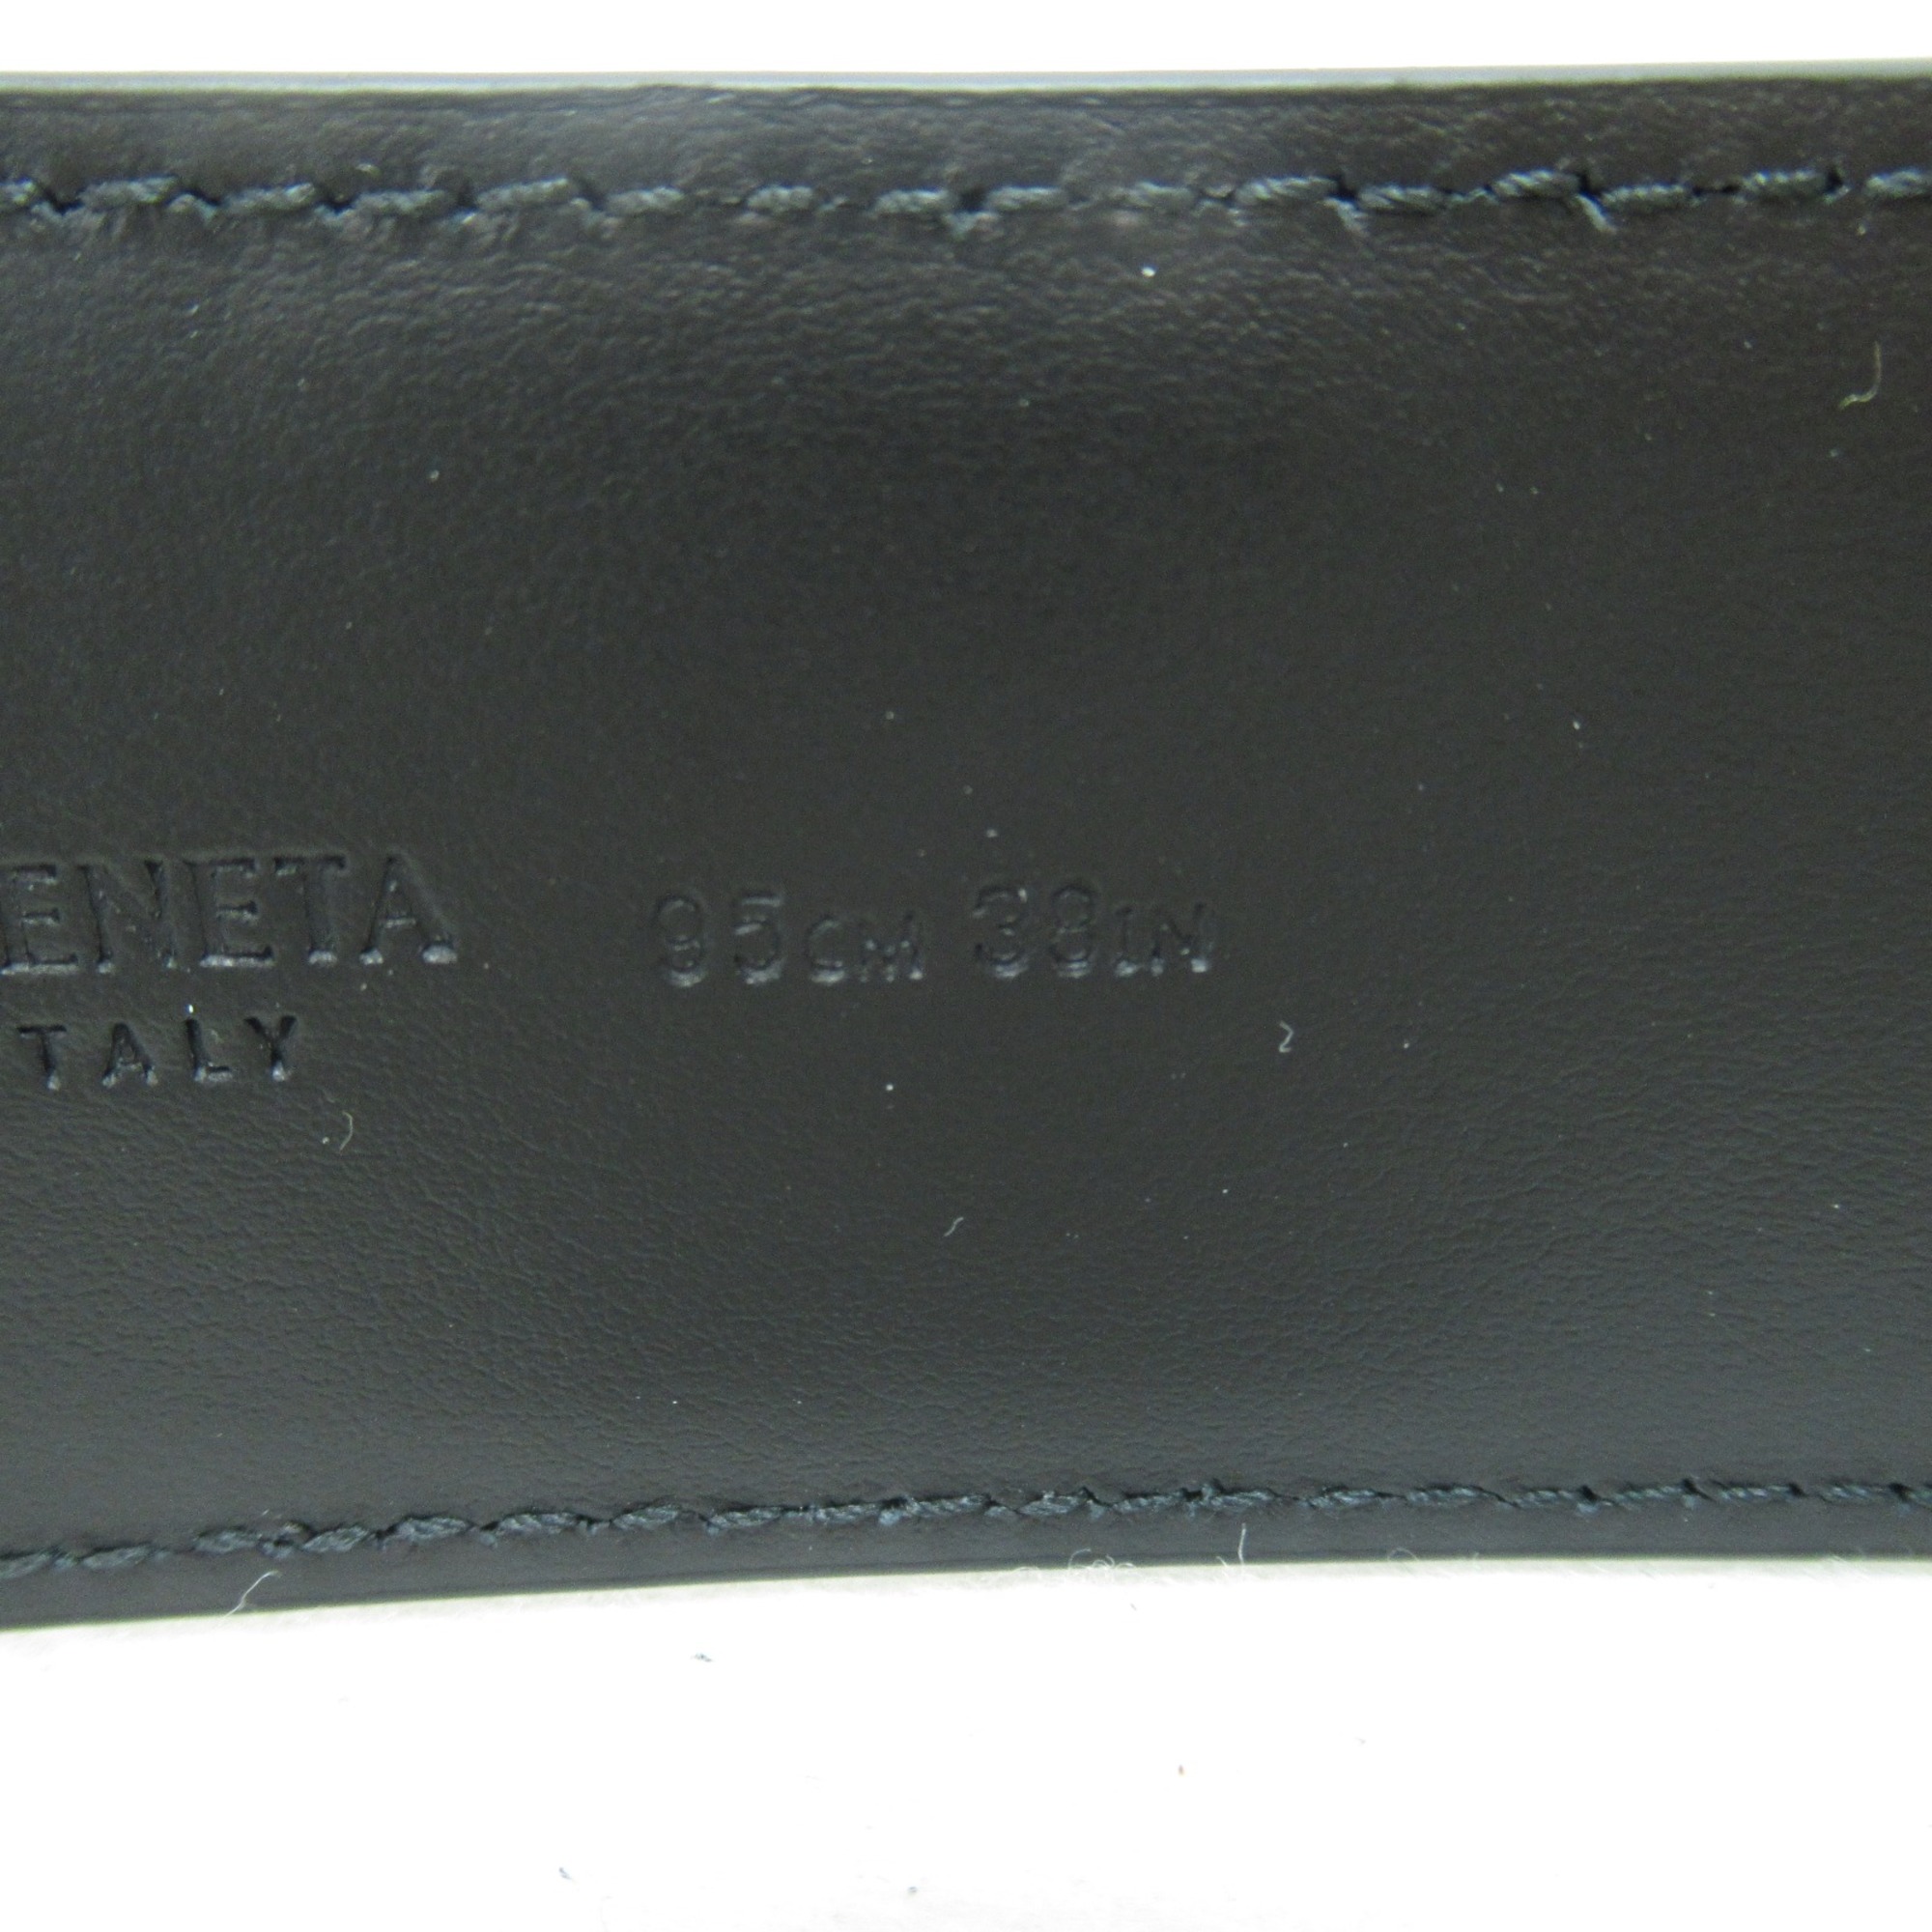 BOTTEGA VENETA watch belt Black leather 755155VALKO880395